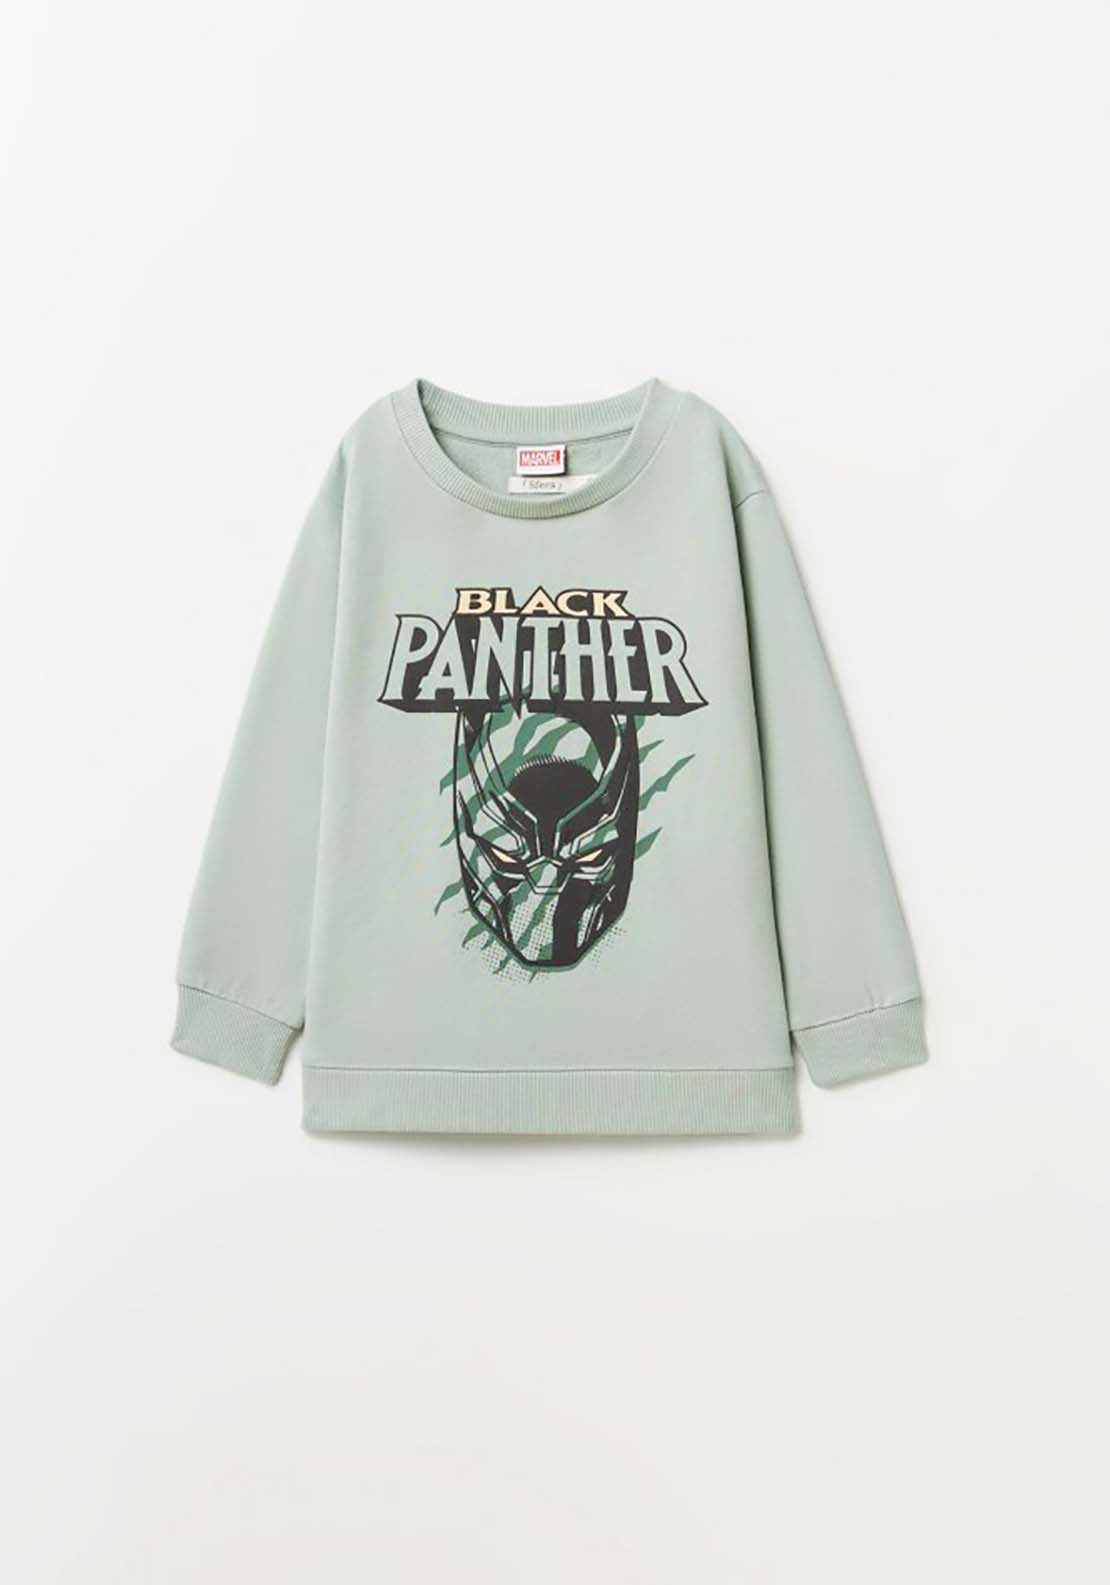 Sfera Black Panther Jumper - Green 1 Shaws Department Stores